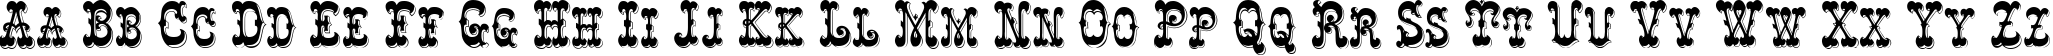 Пример написания английского алфавита шрифтом Rochester